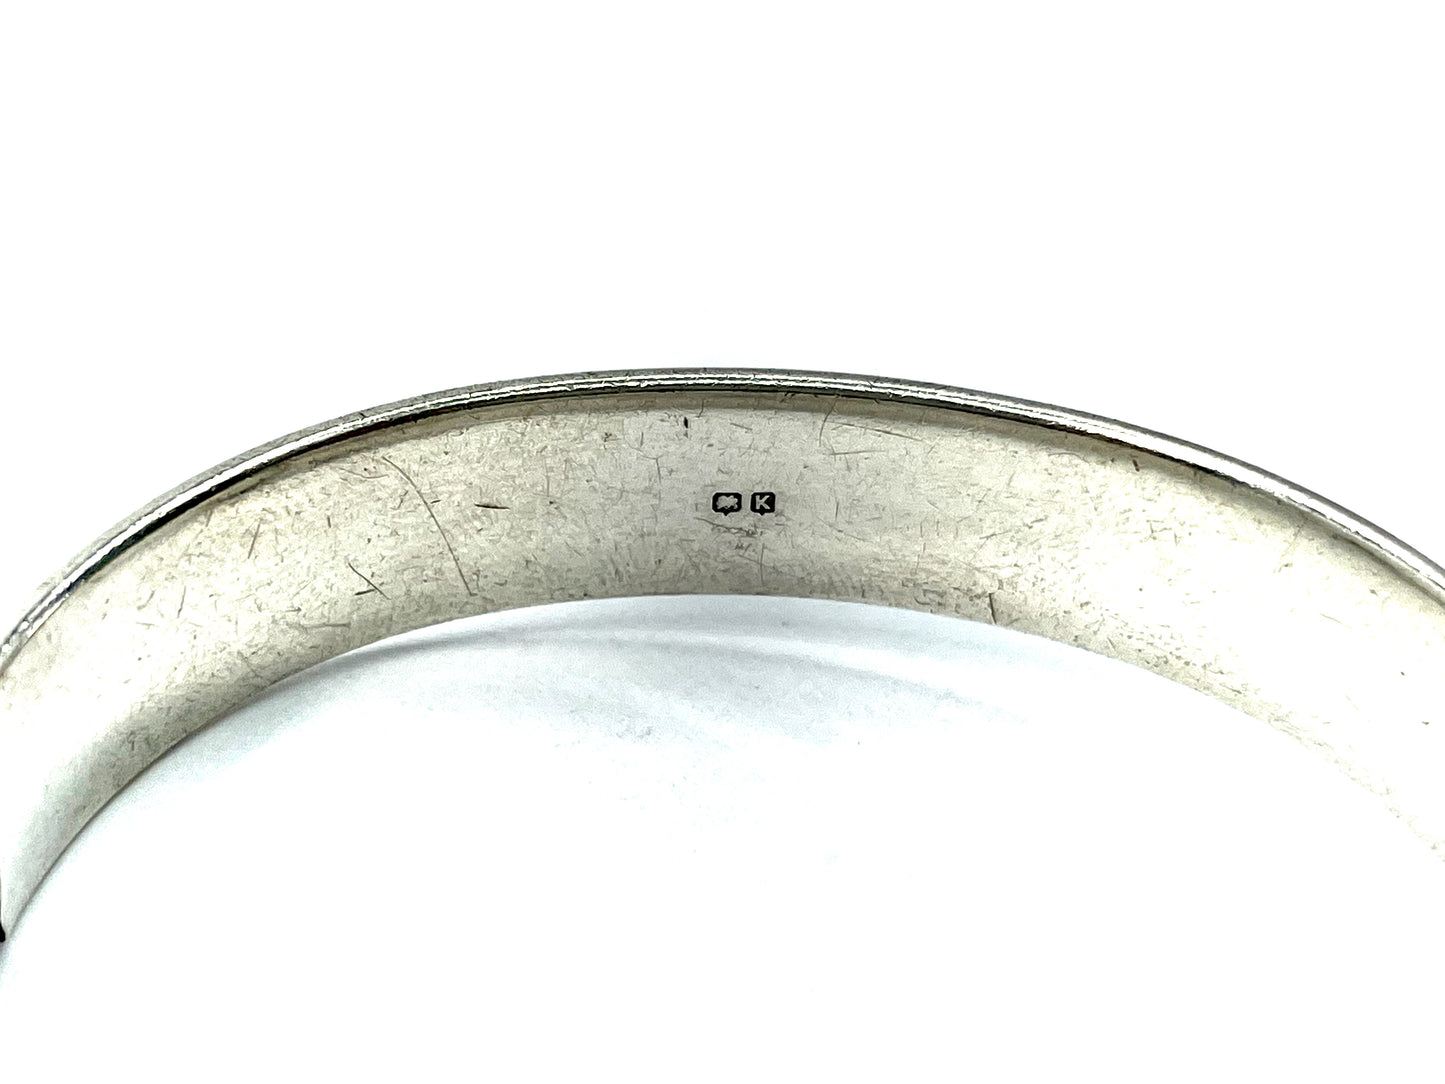 charles-horner-silver-bangle-bracelet